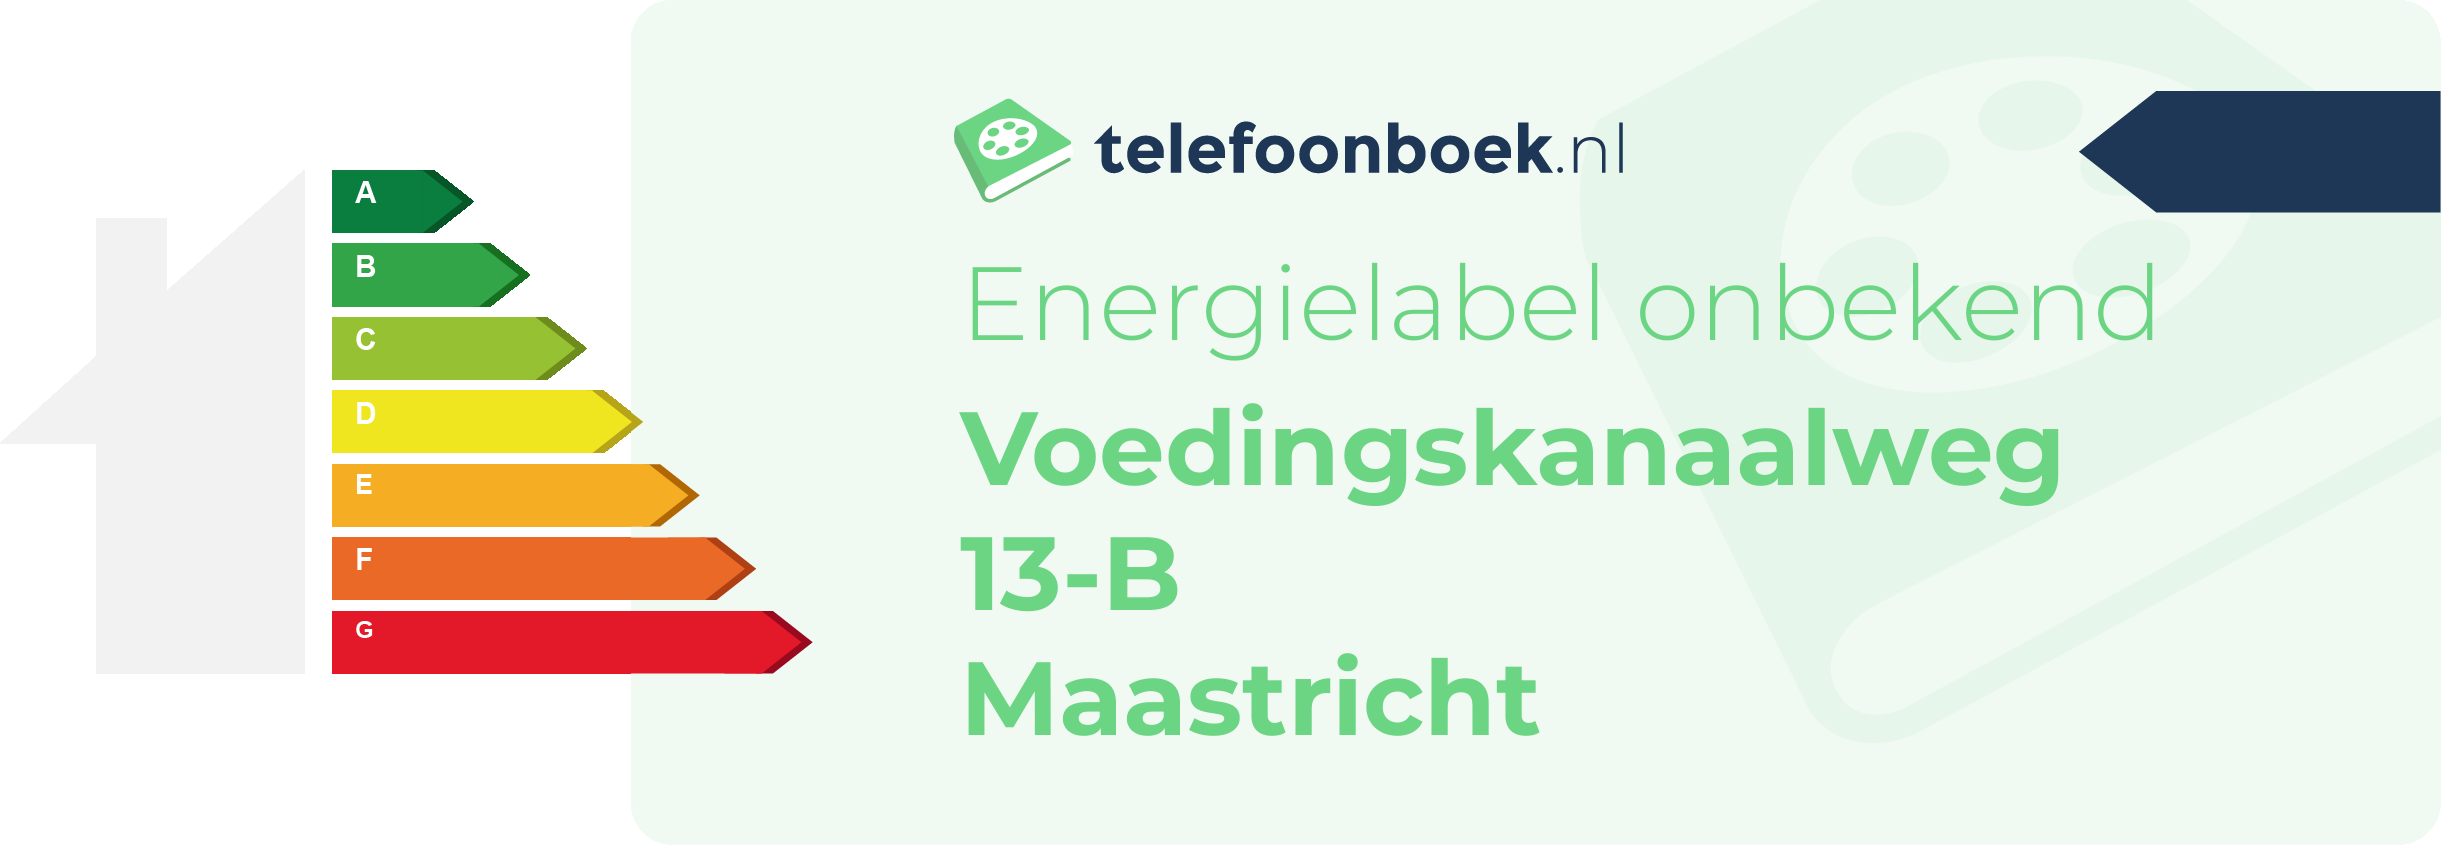 Energielabel Voedingskanaalweg 13-B Maastricht